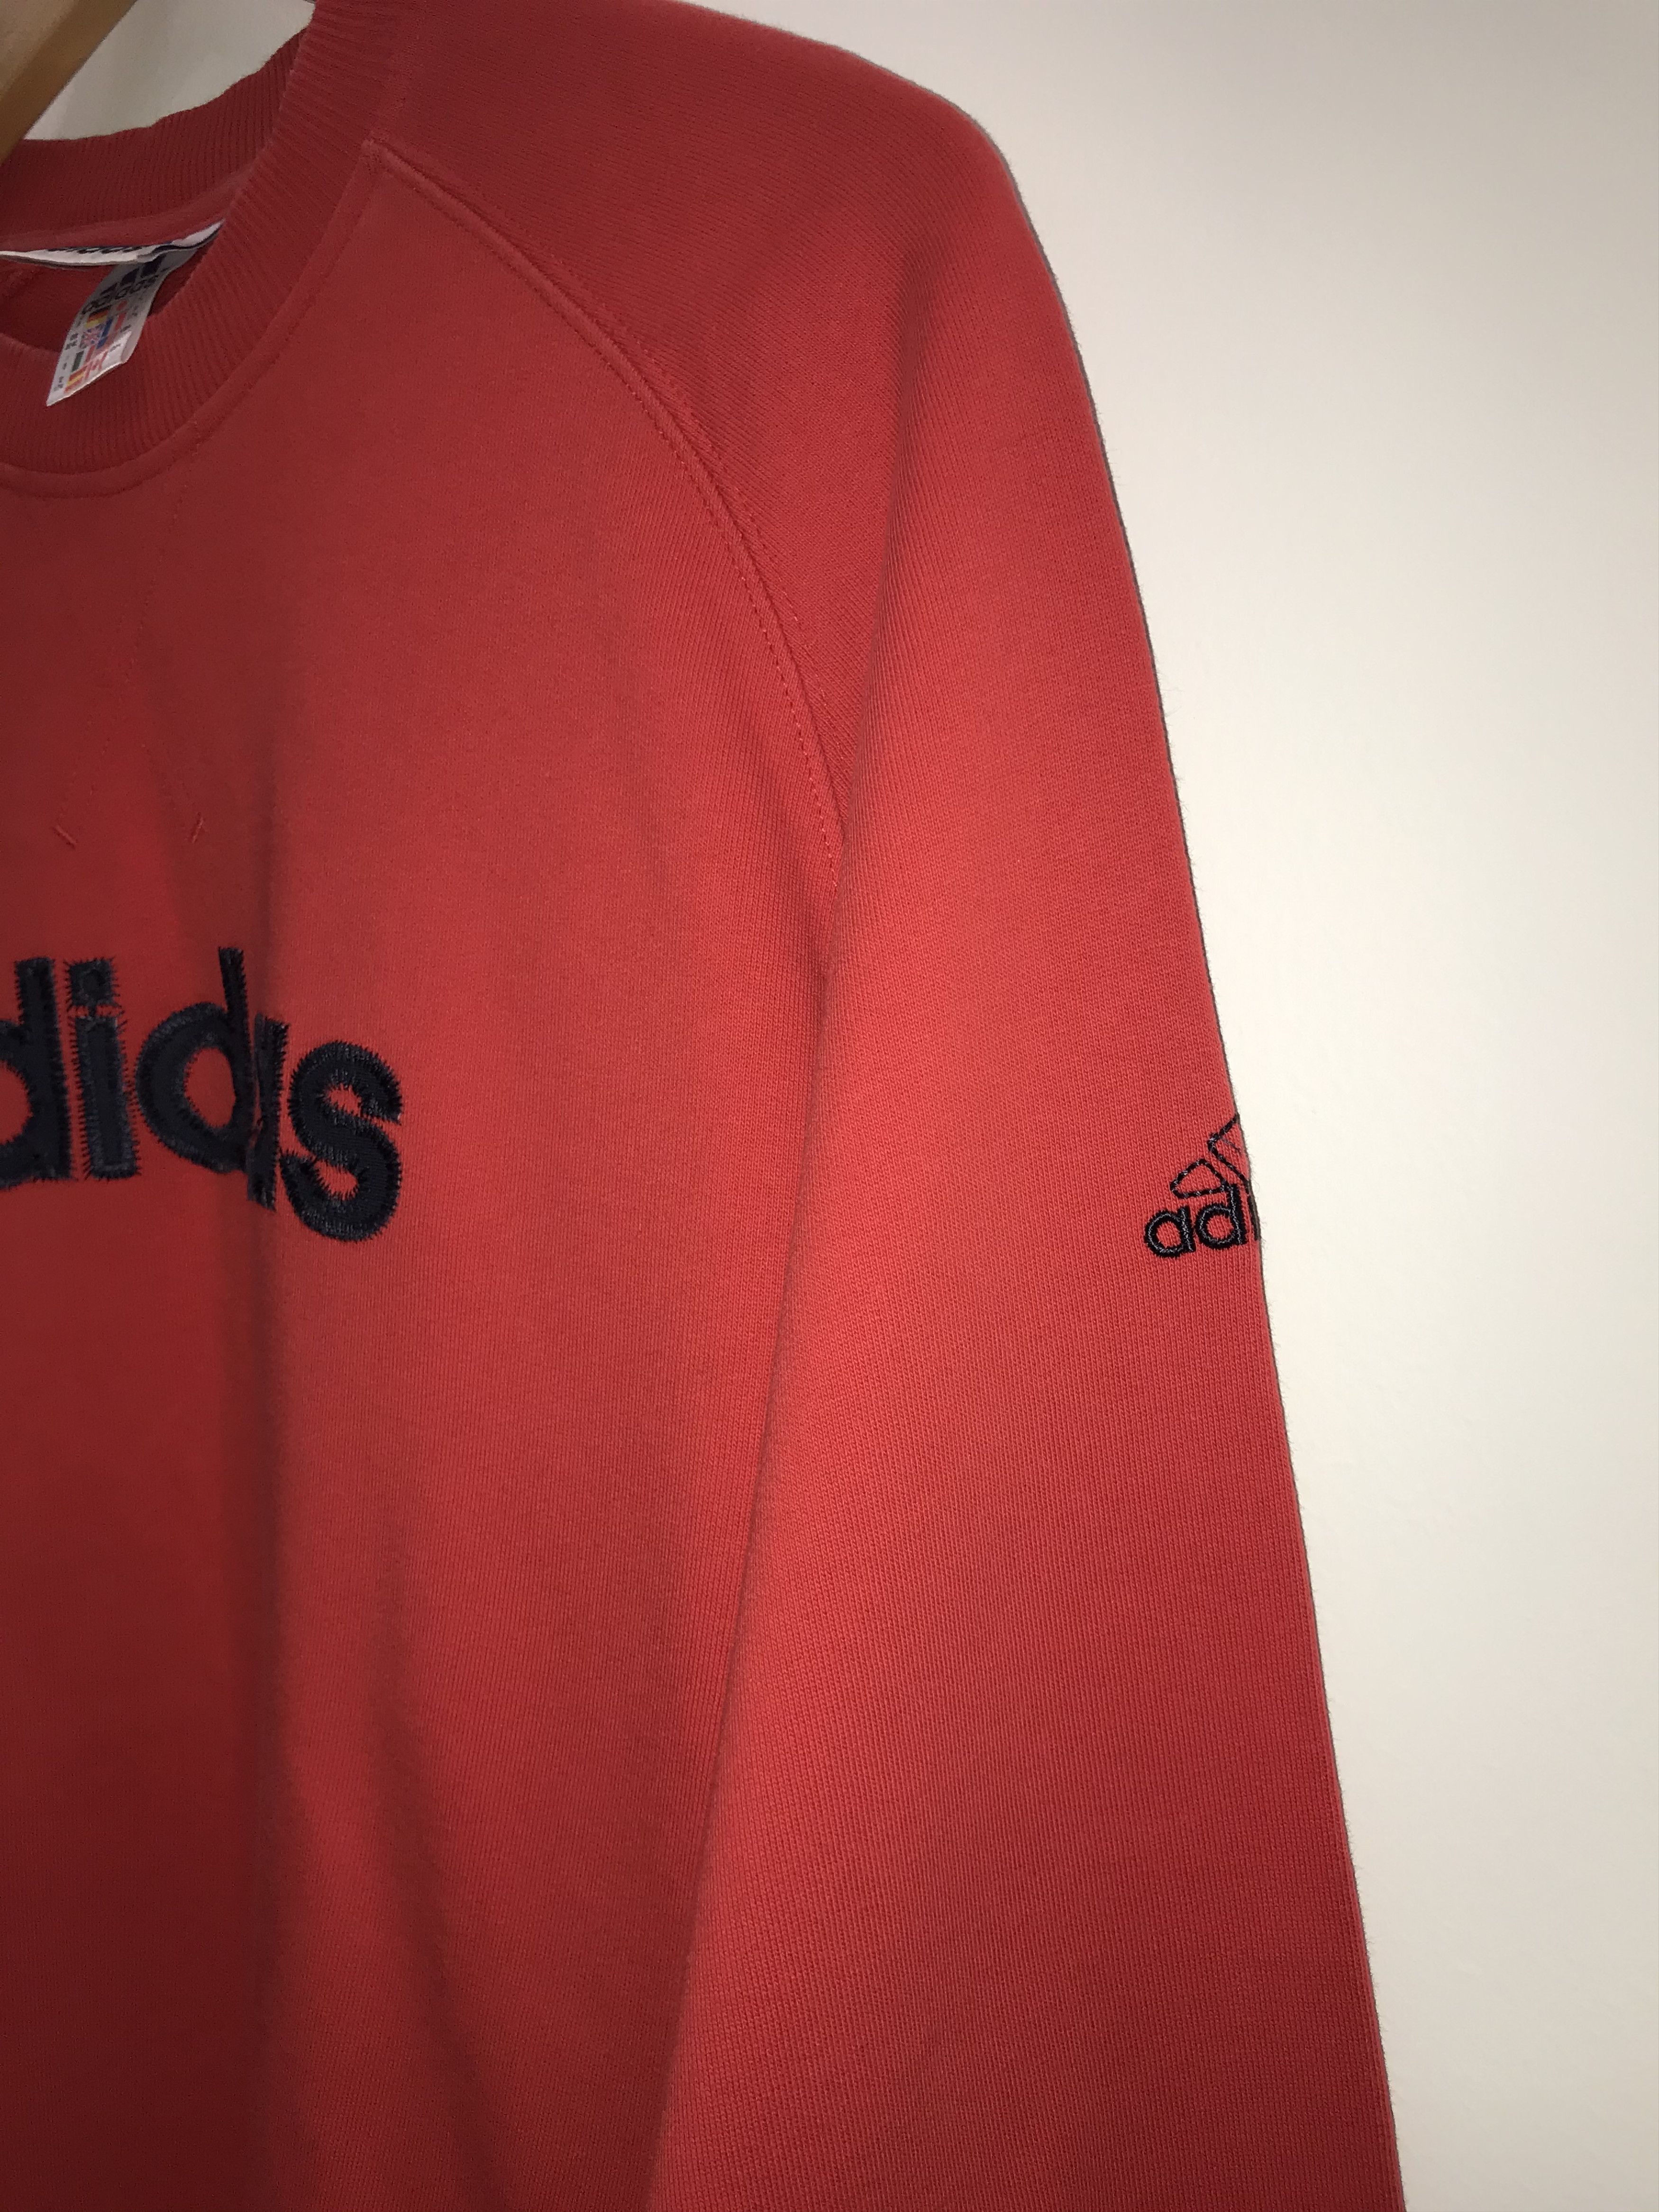 Adidas Vintage Adidas Red Sweatshirt Originals Equipment 00s Size US L / EU 52-54 / 3 - 4 Thumbnail